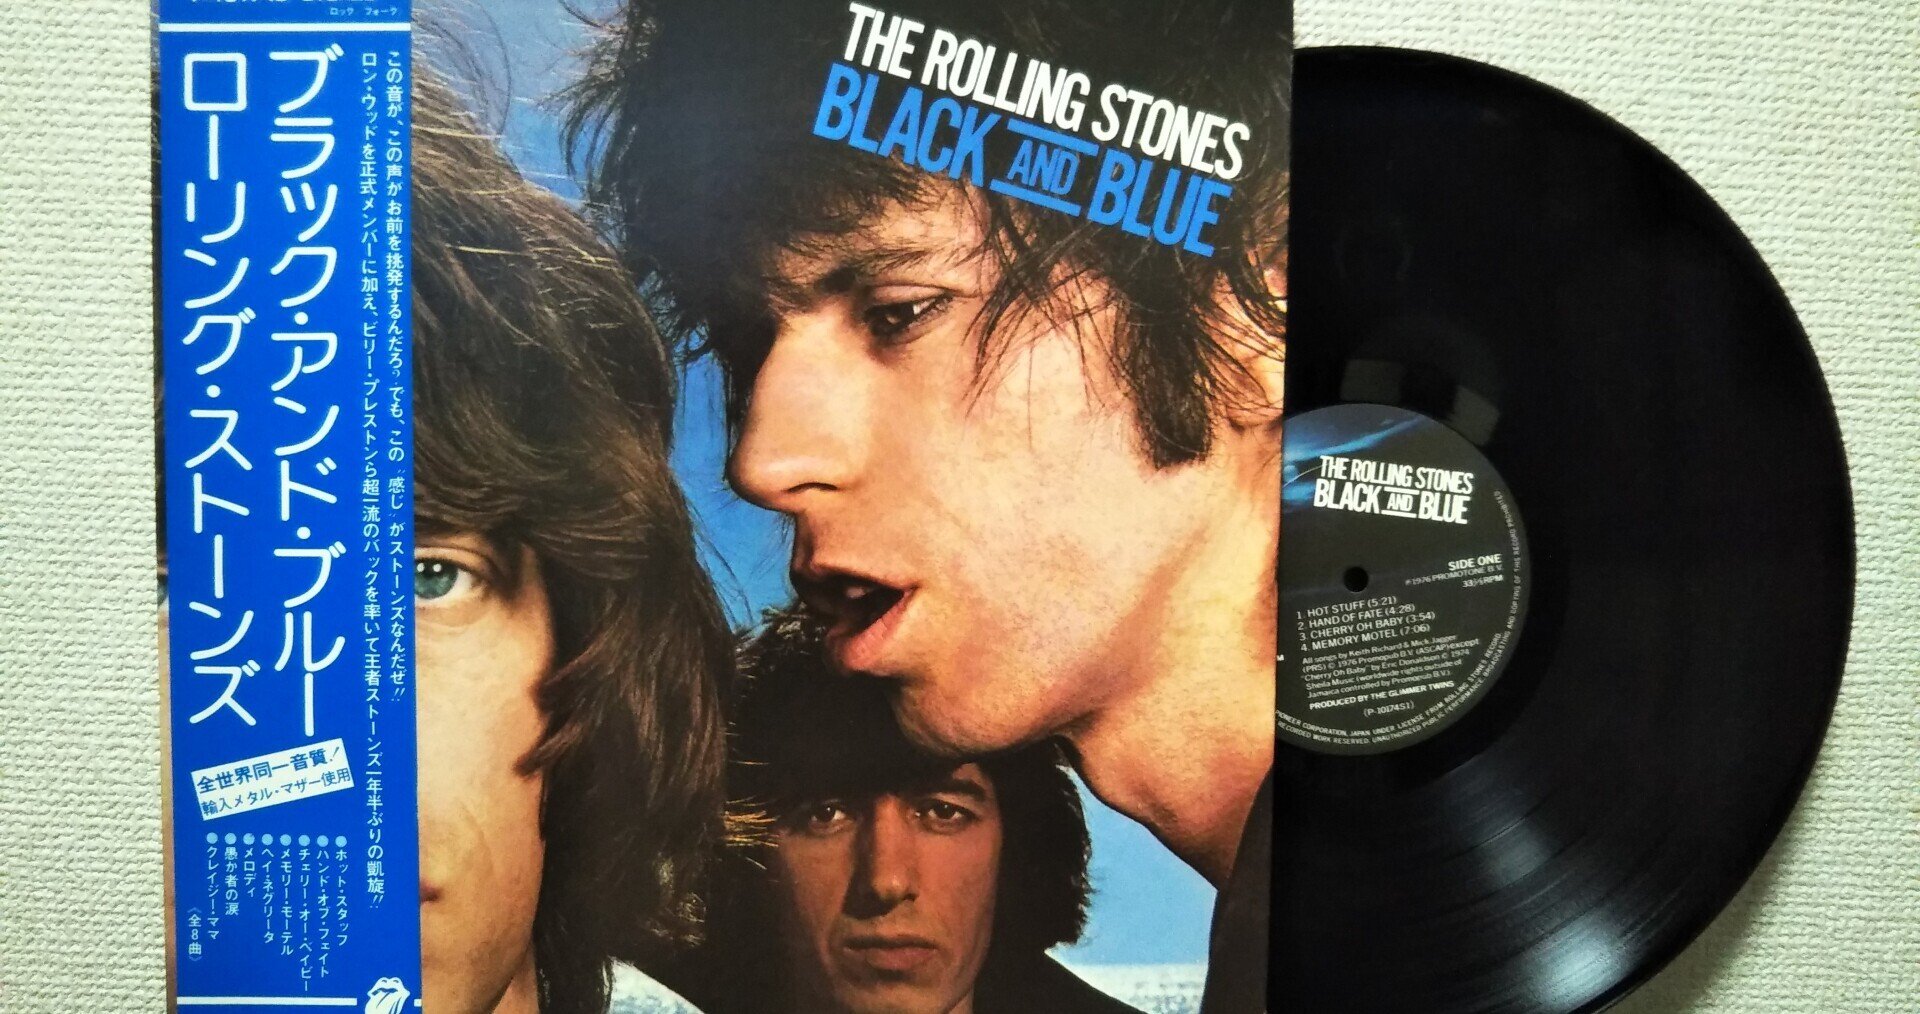 Black and Blue】(1976)Rolling Stones 国内初回盤は輸入メタルマザー 